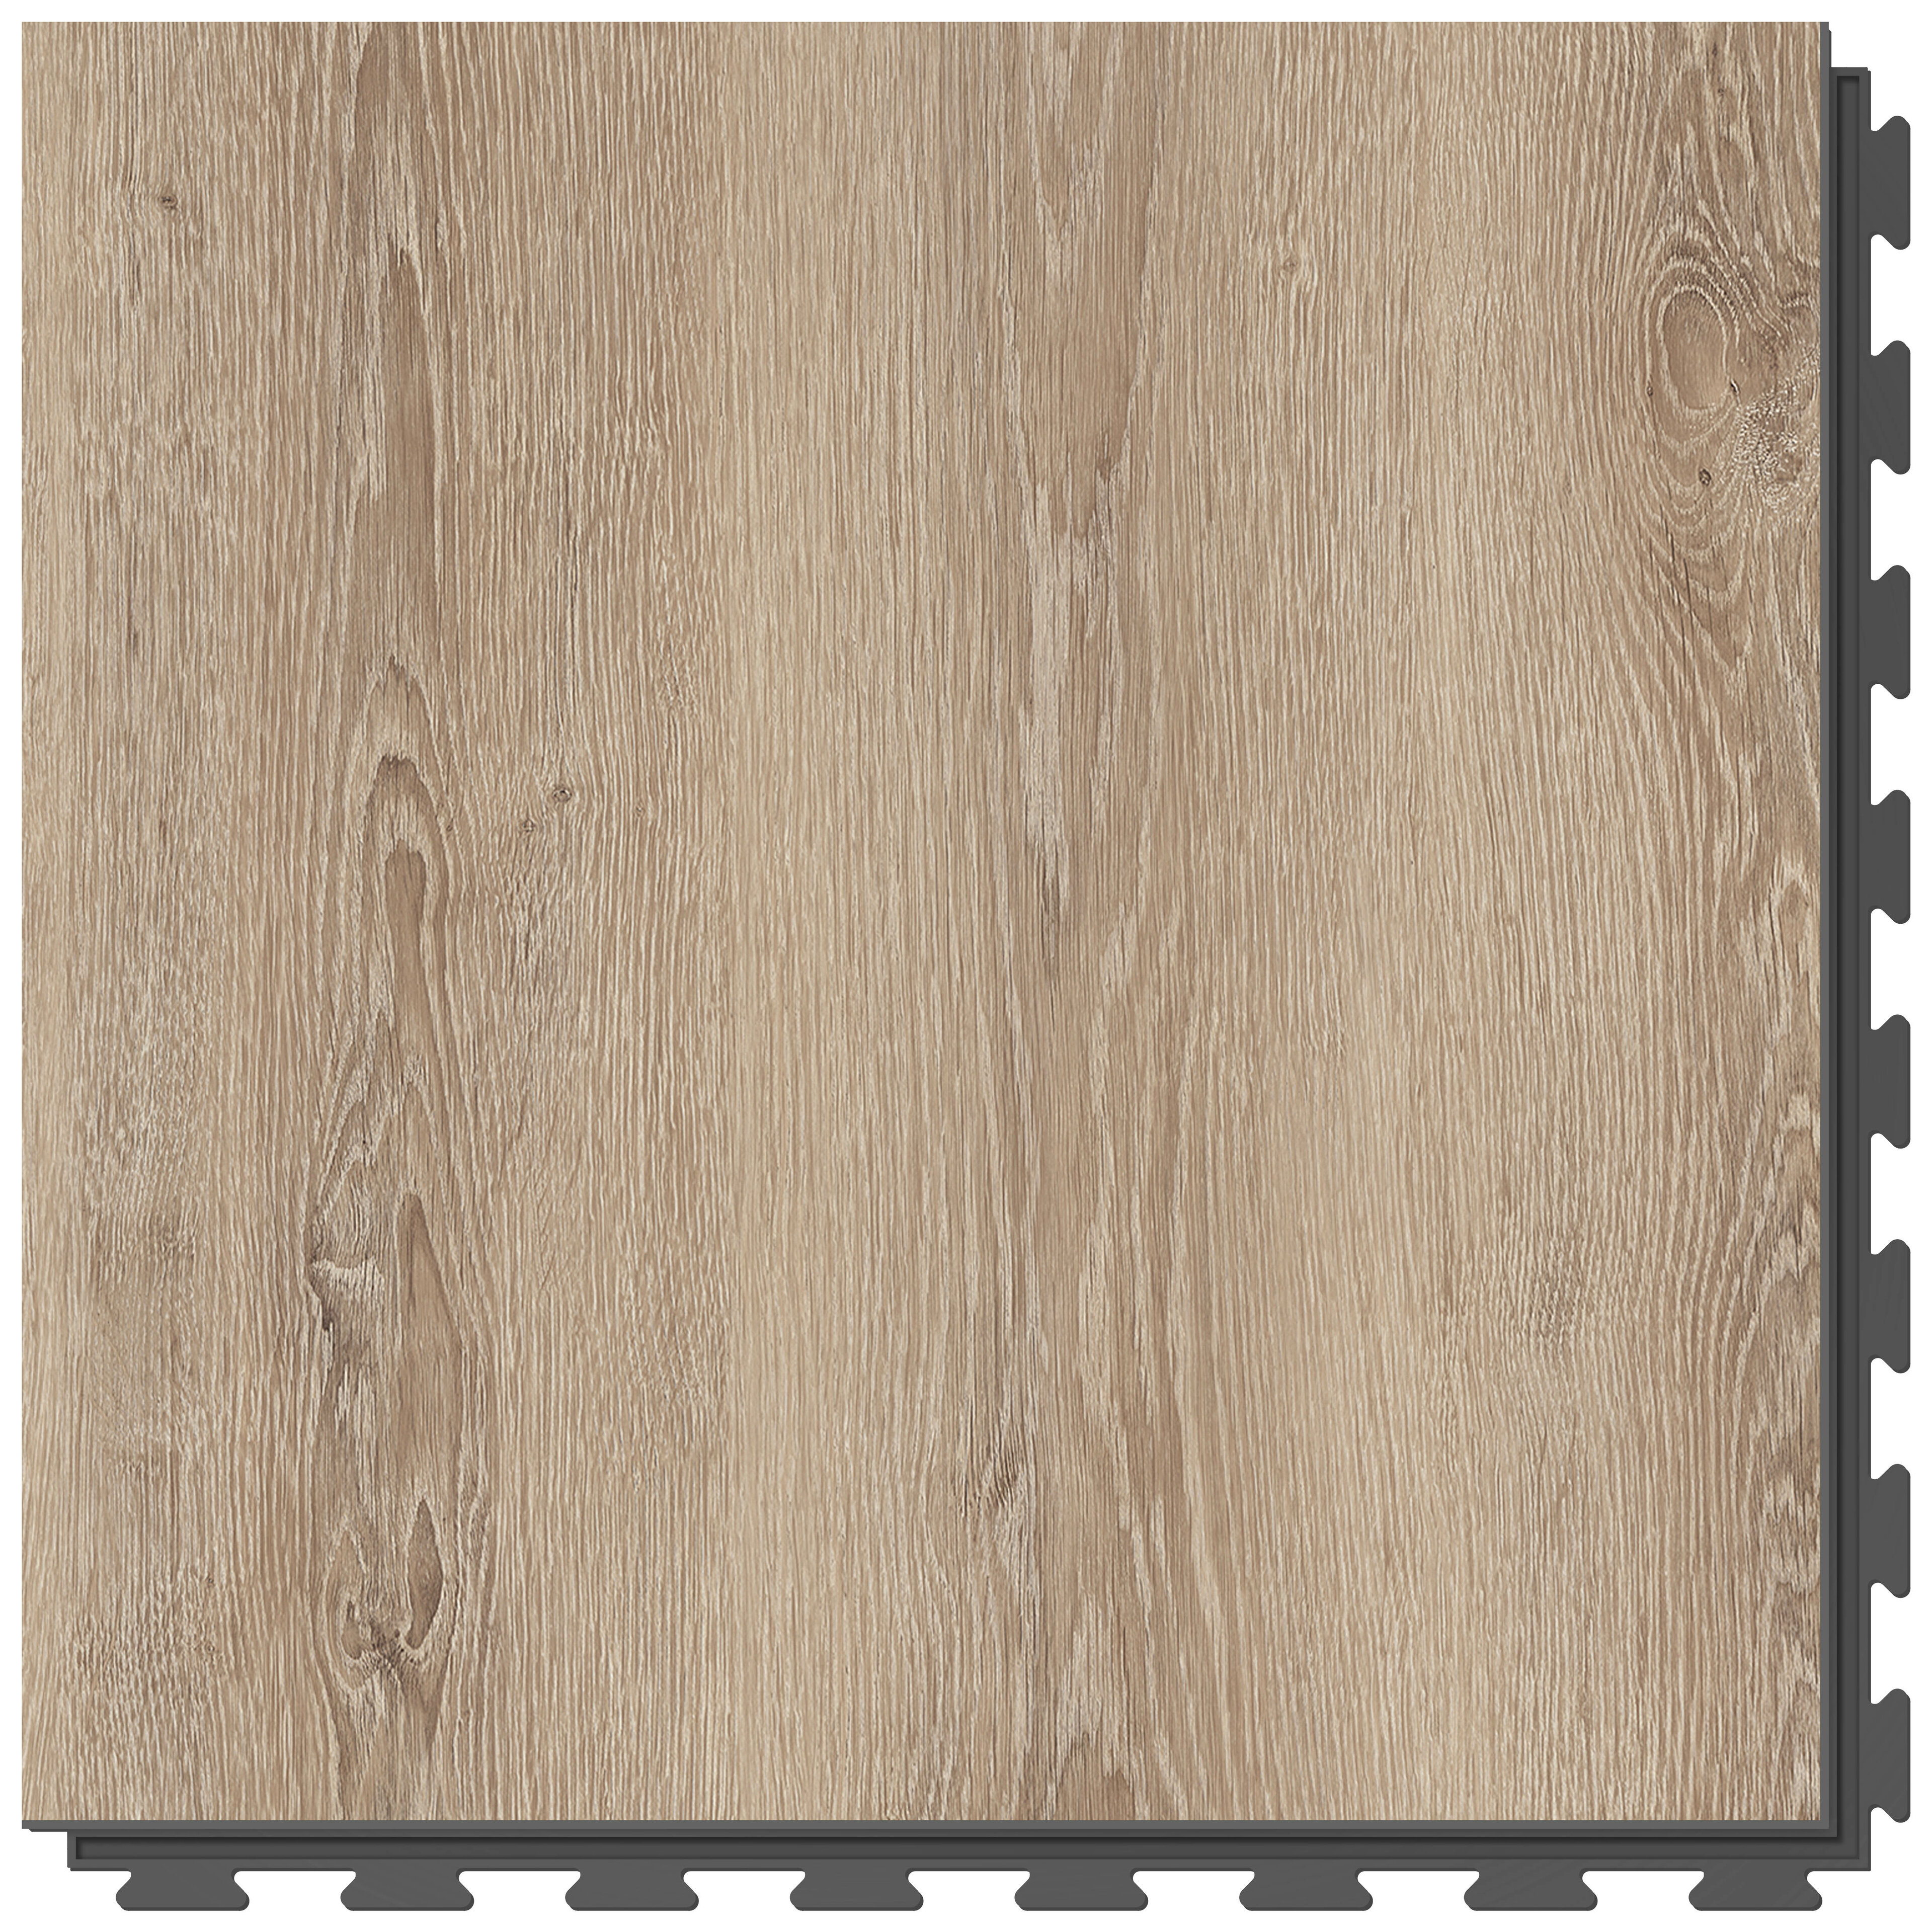 Hnědá vinylová PVC dlažba Fortelock Business Graphite Tyrolean oak W001 - délka 66,8 cm, šířka 66,8 cm, výška 0,7 cm